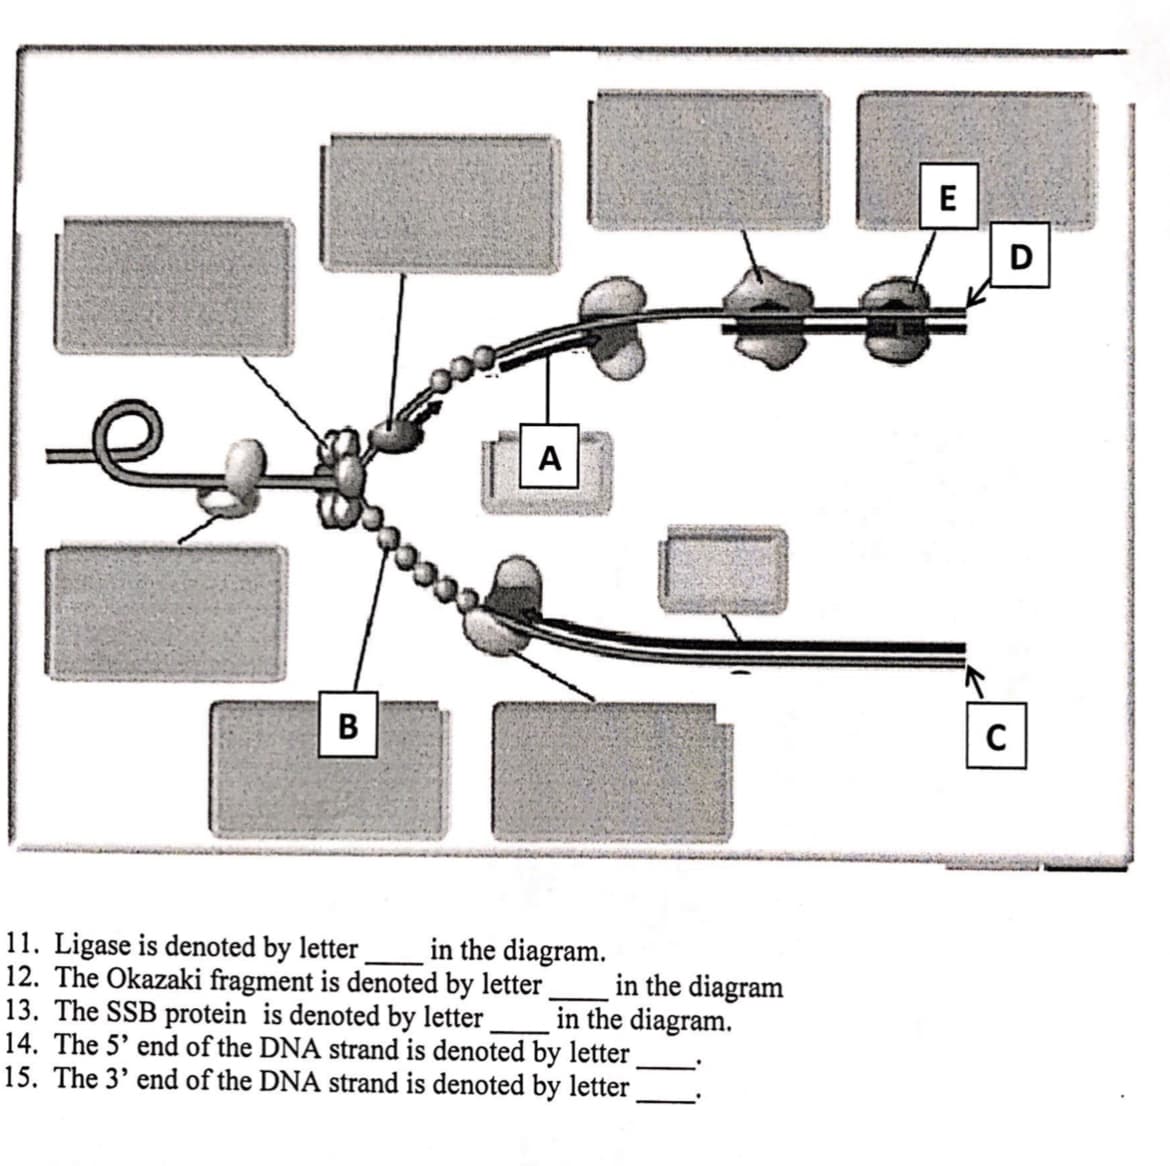 E
A
11. Ligase is denoted by letter
12. The Okazaki fragment is denoted by letter
13. The SSB protein is denoted by letter
14. The 5' end of the DNA strand is denoted by letter
15. The 3' end of the DNA strand is denoted by letter
in the diagram.
in the diagram
in the diagram.
B
